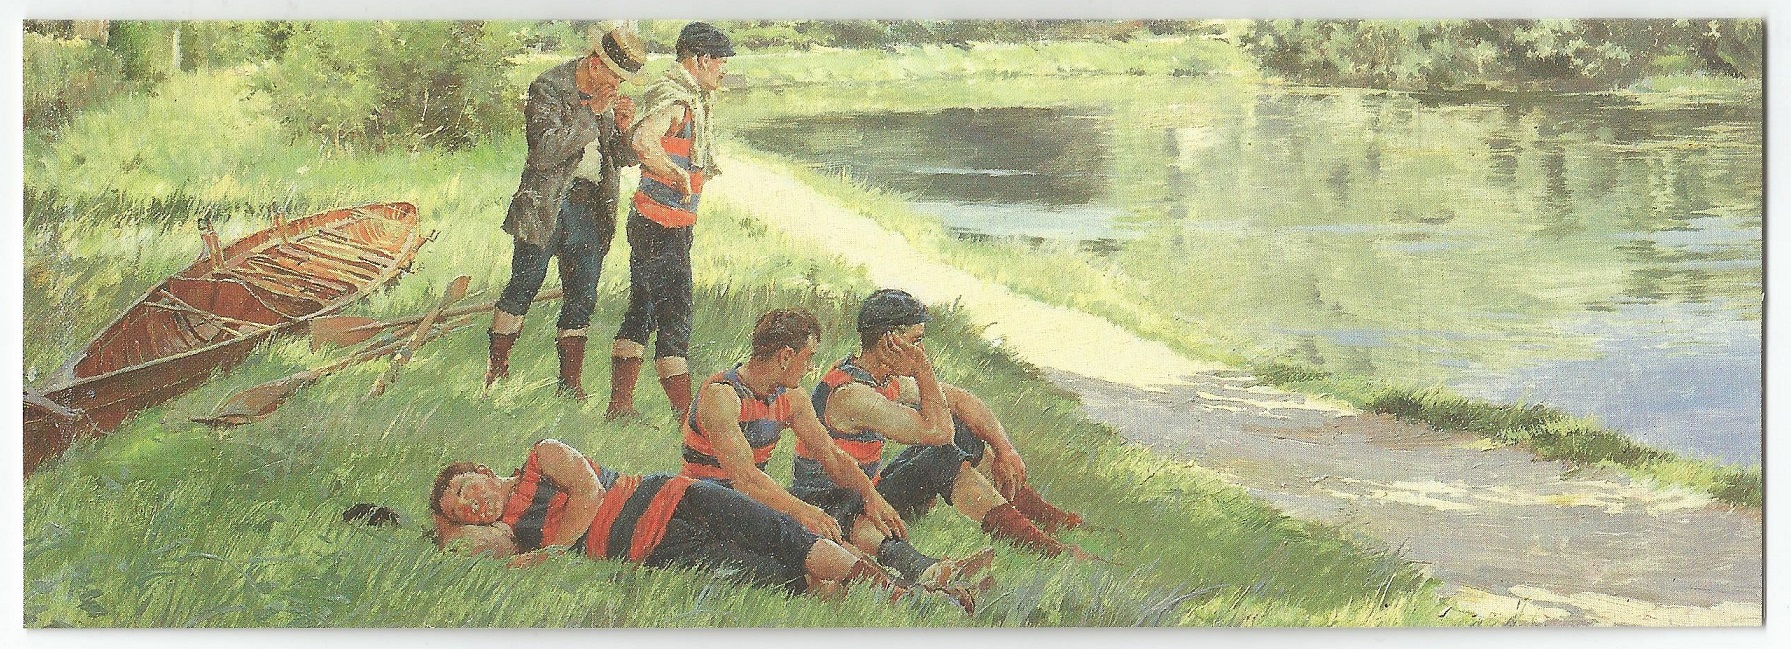 painting fra le repos de lequipe 1900 by ferdinand joseph gueldry 1858 1945